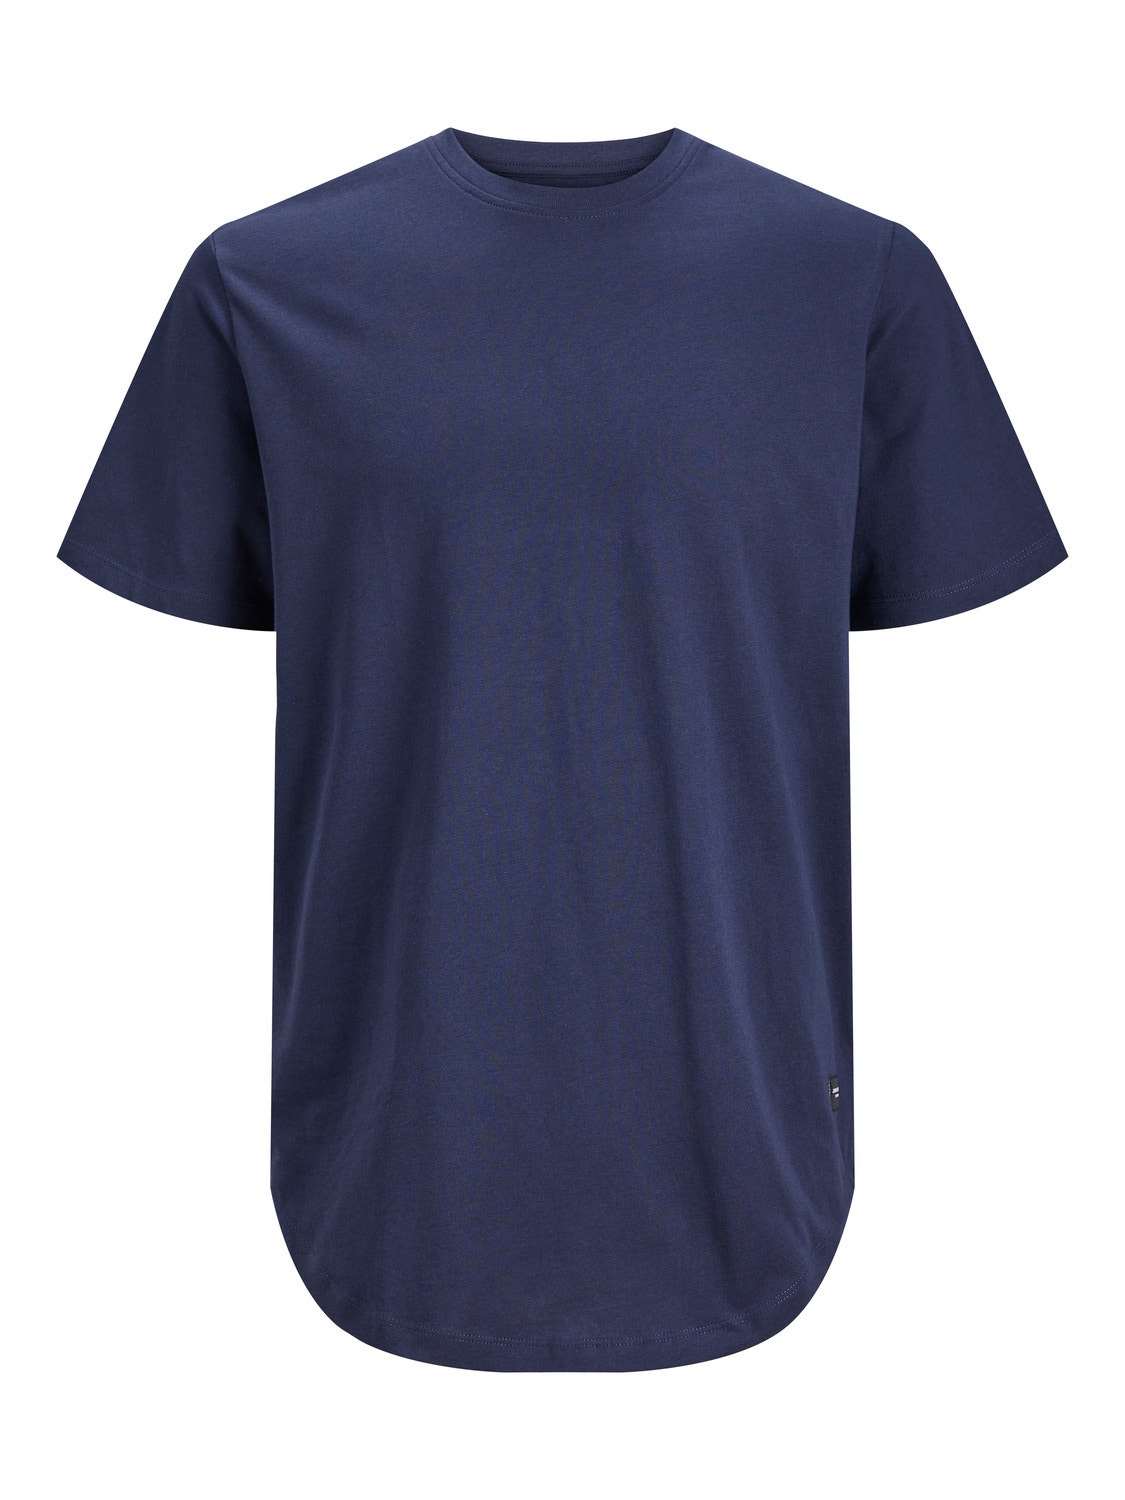 Jack & Jones T-shirt Liso Decote Redondo -Navy Blazer - 12113648